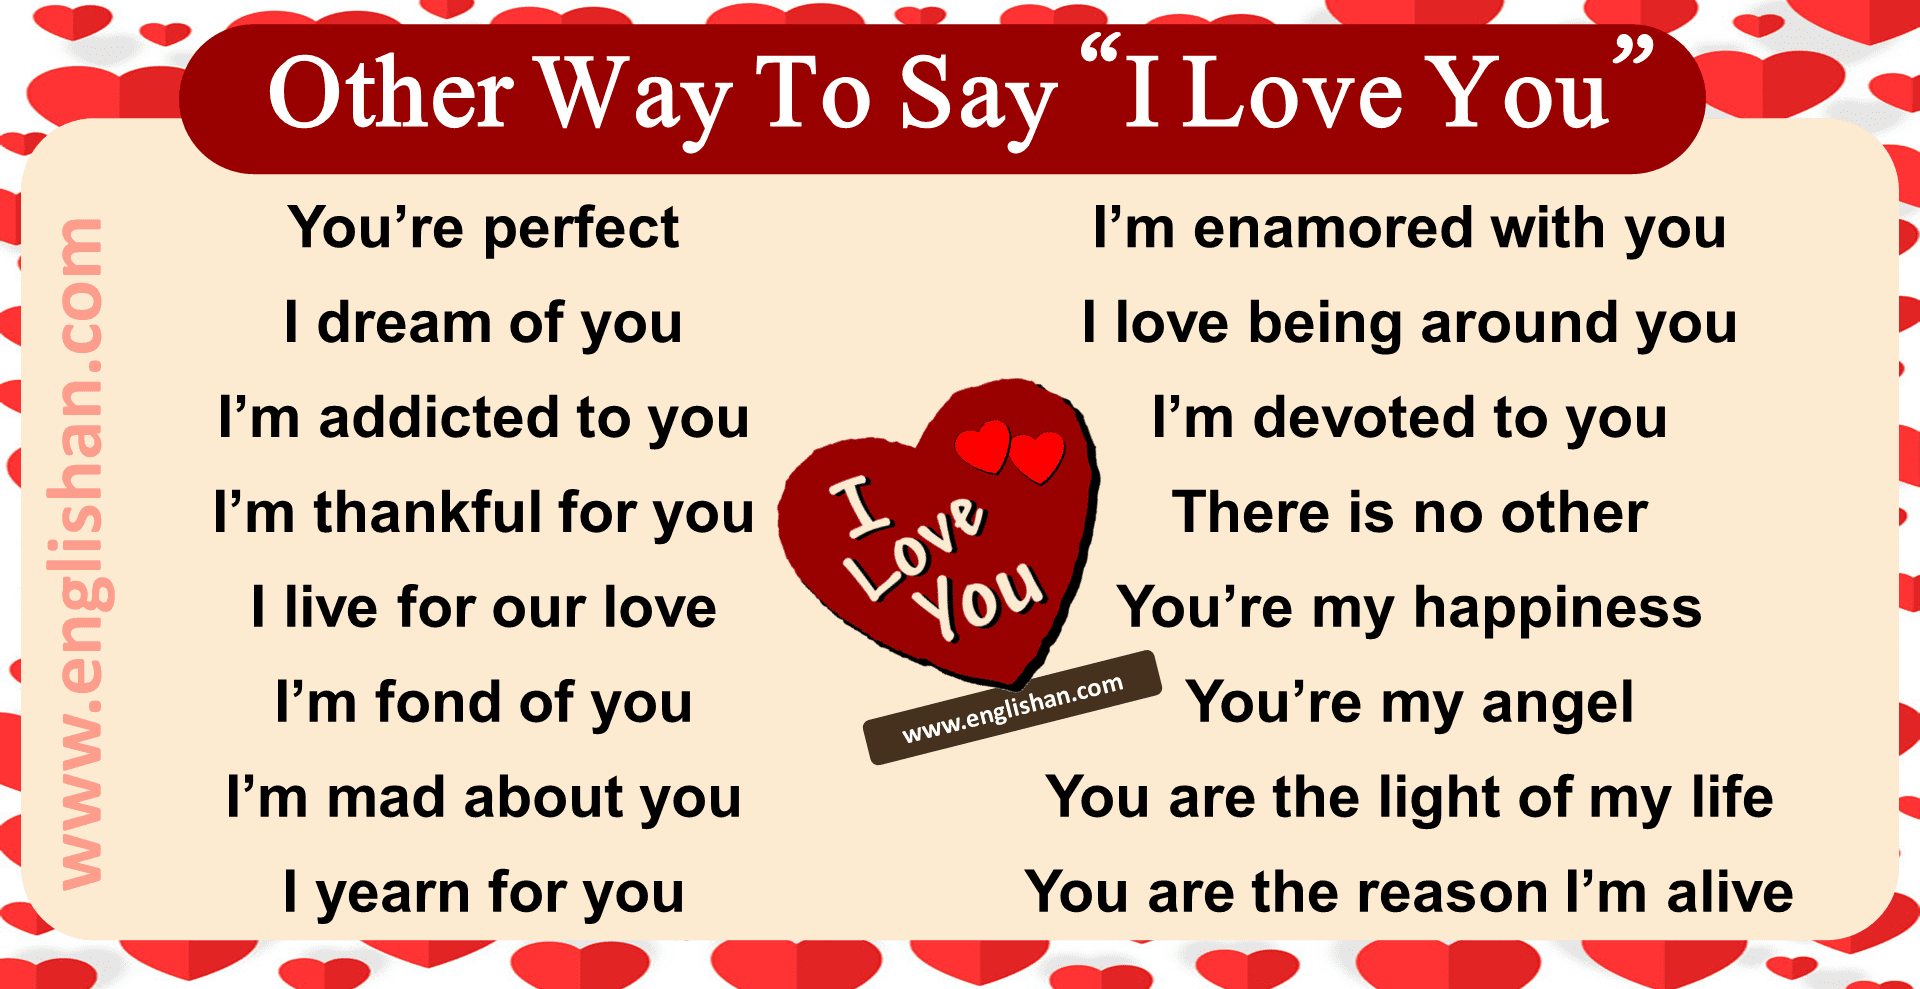 Funny Ways to Say I Love You - Englishan